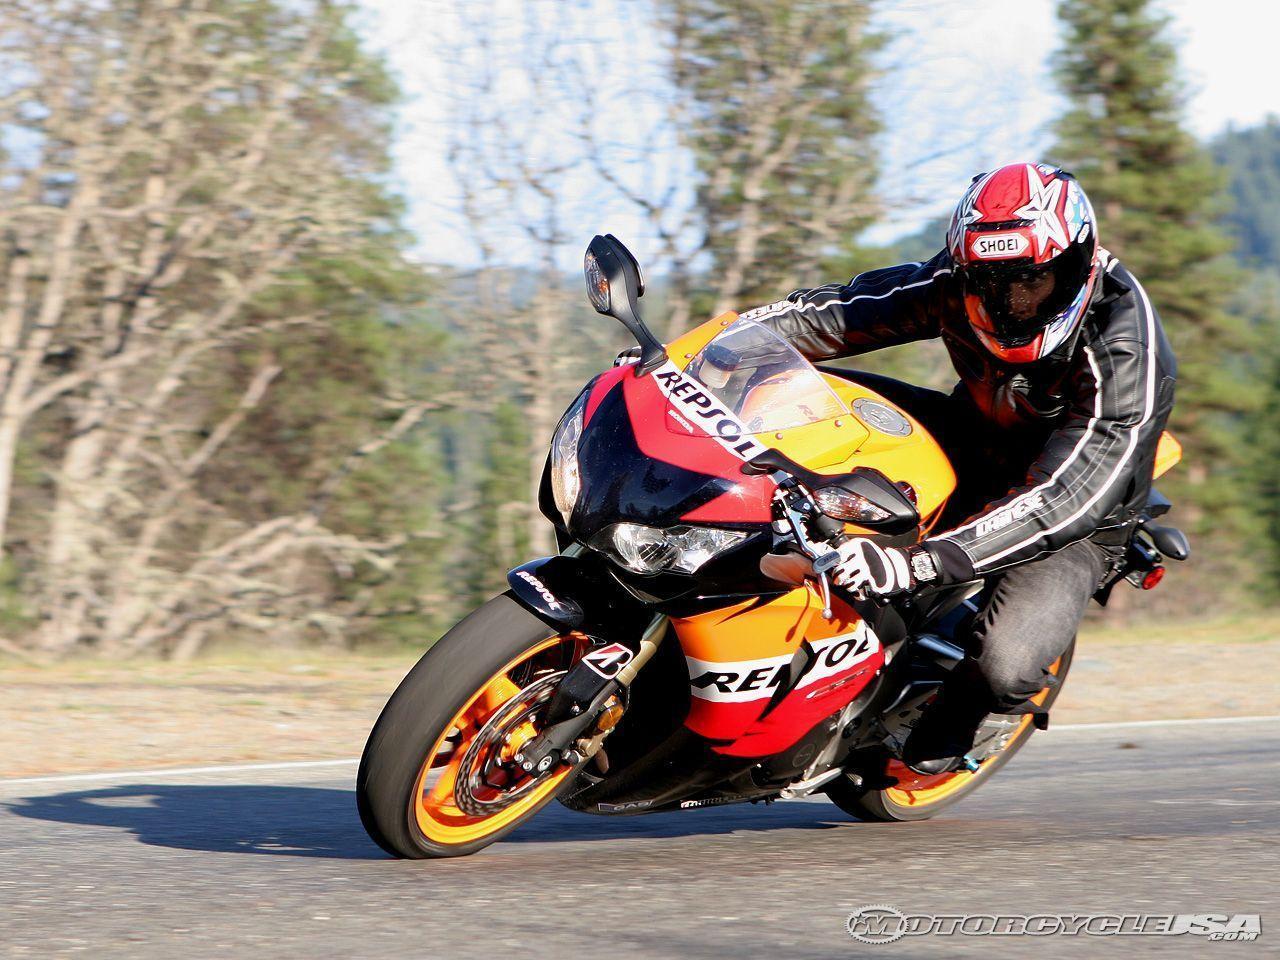 Honda CBR1000RR: Sportbike of the Year